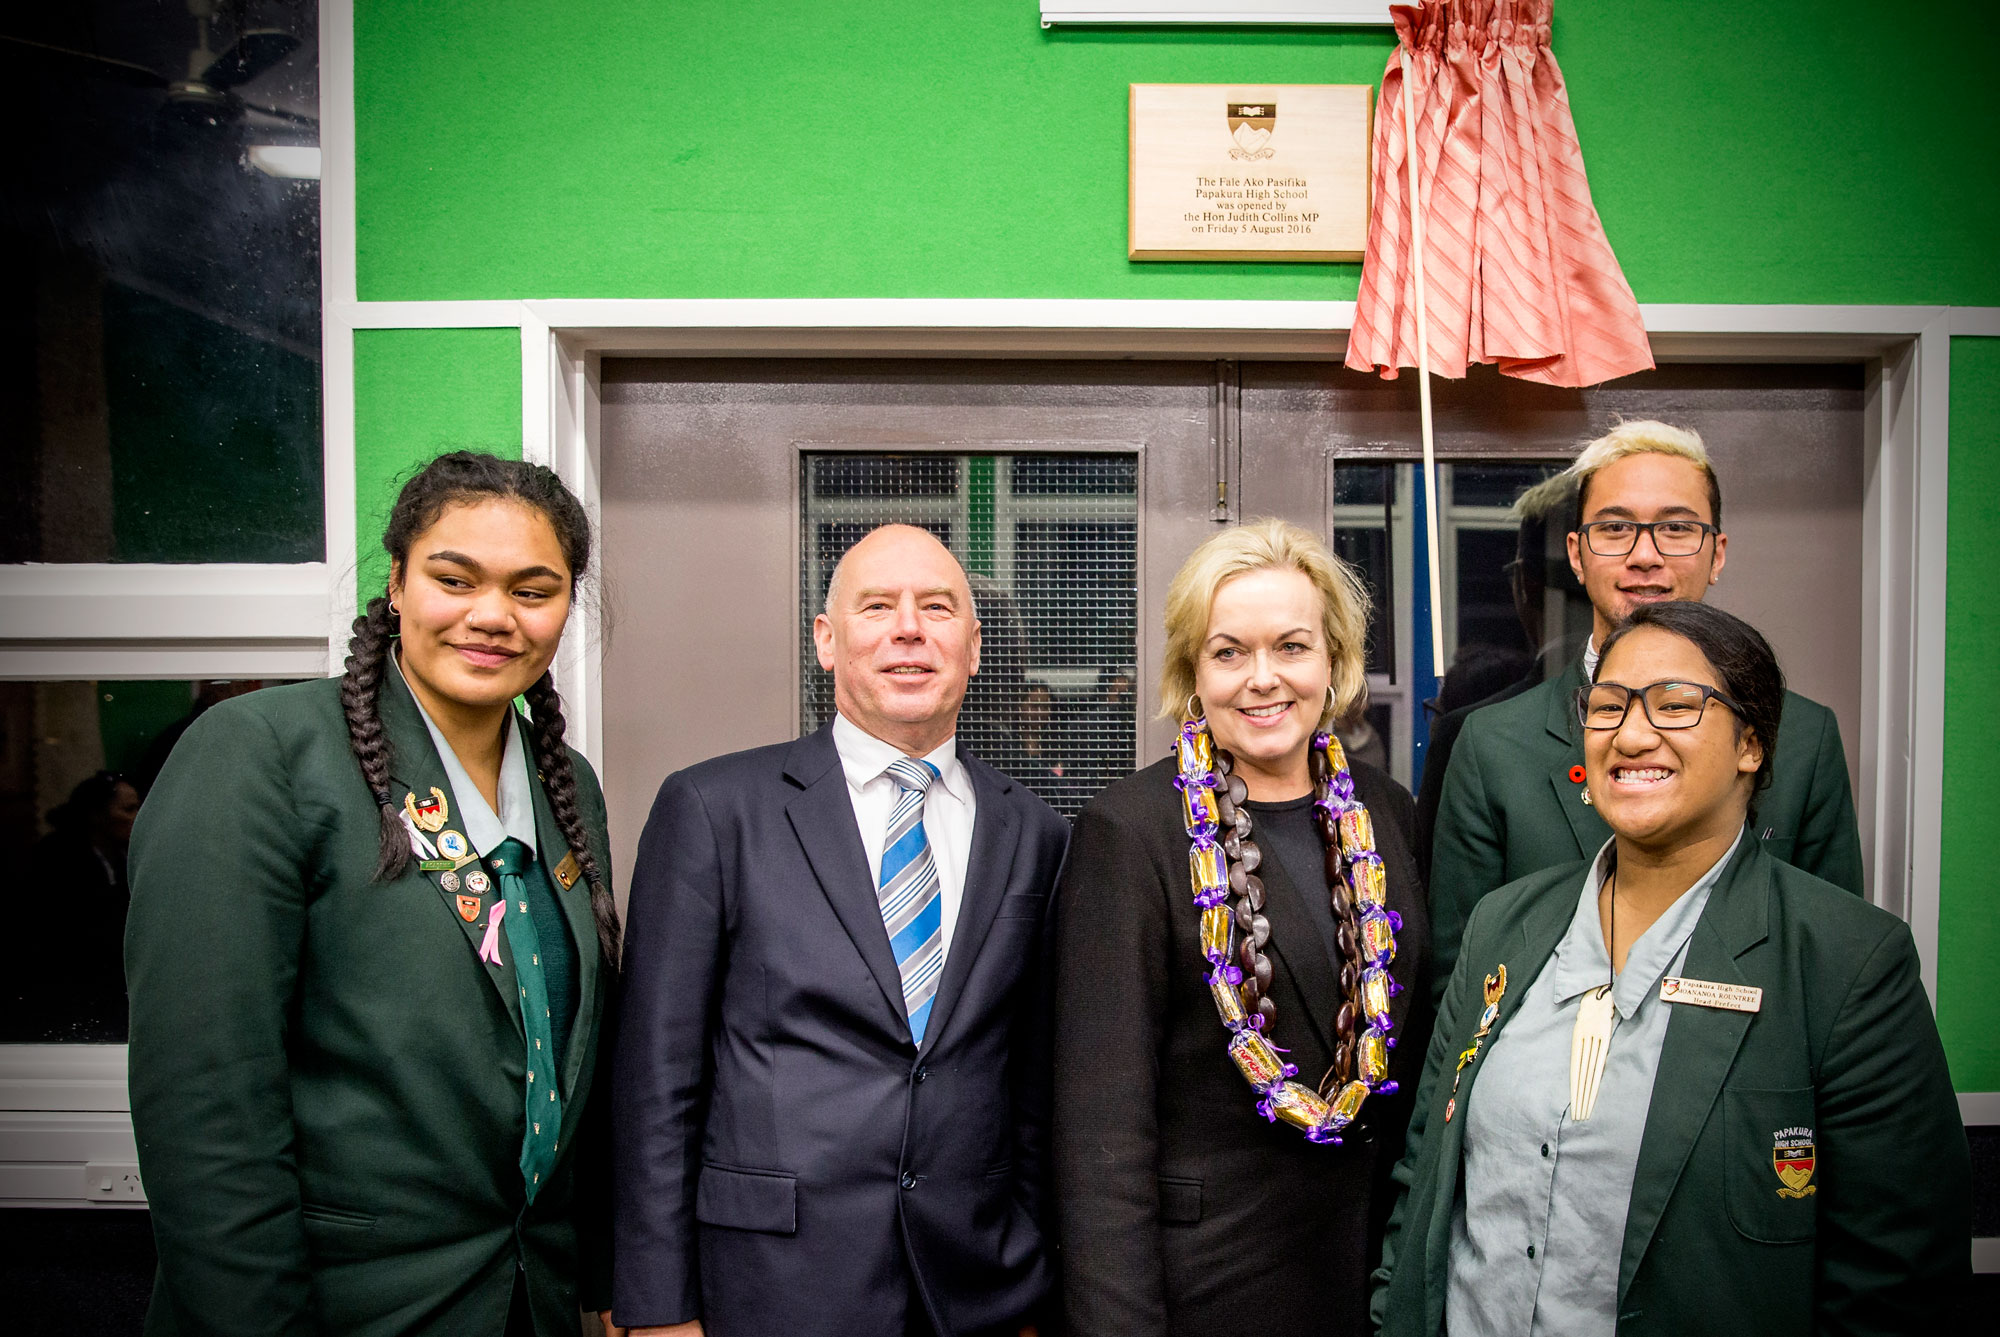 Papakura's Member of Parliament Judith Collins opened the school’s new Pasifika Centre